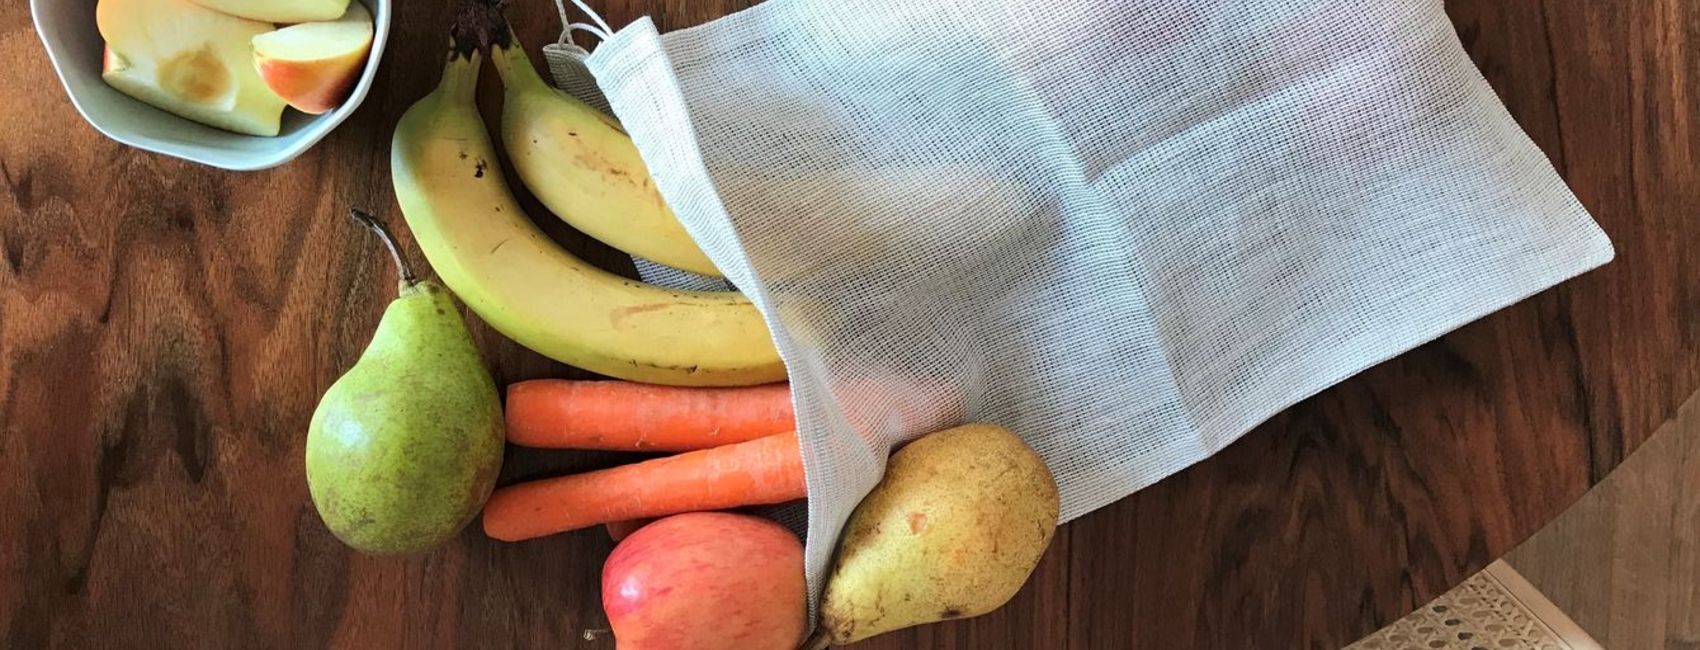 Linen bag for fruits and vegetables